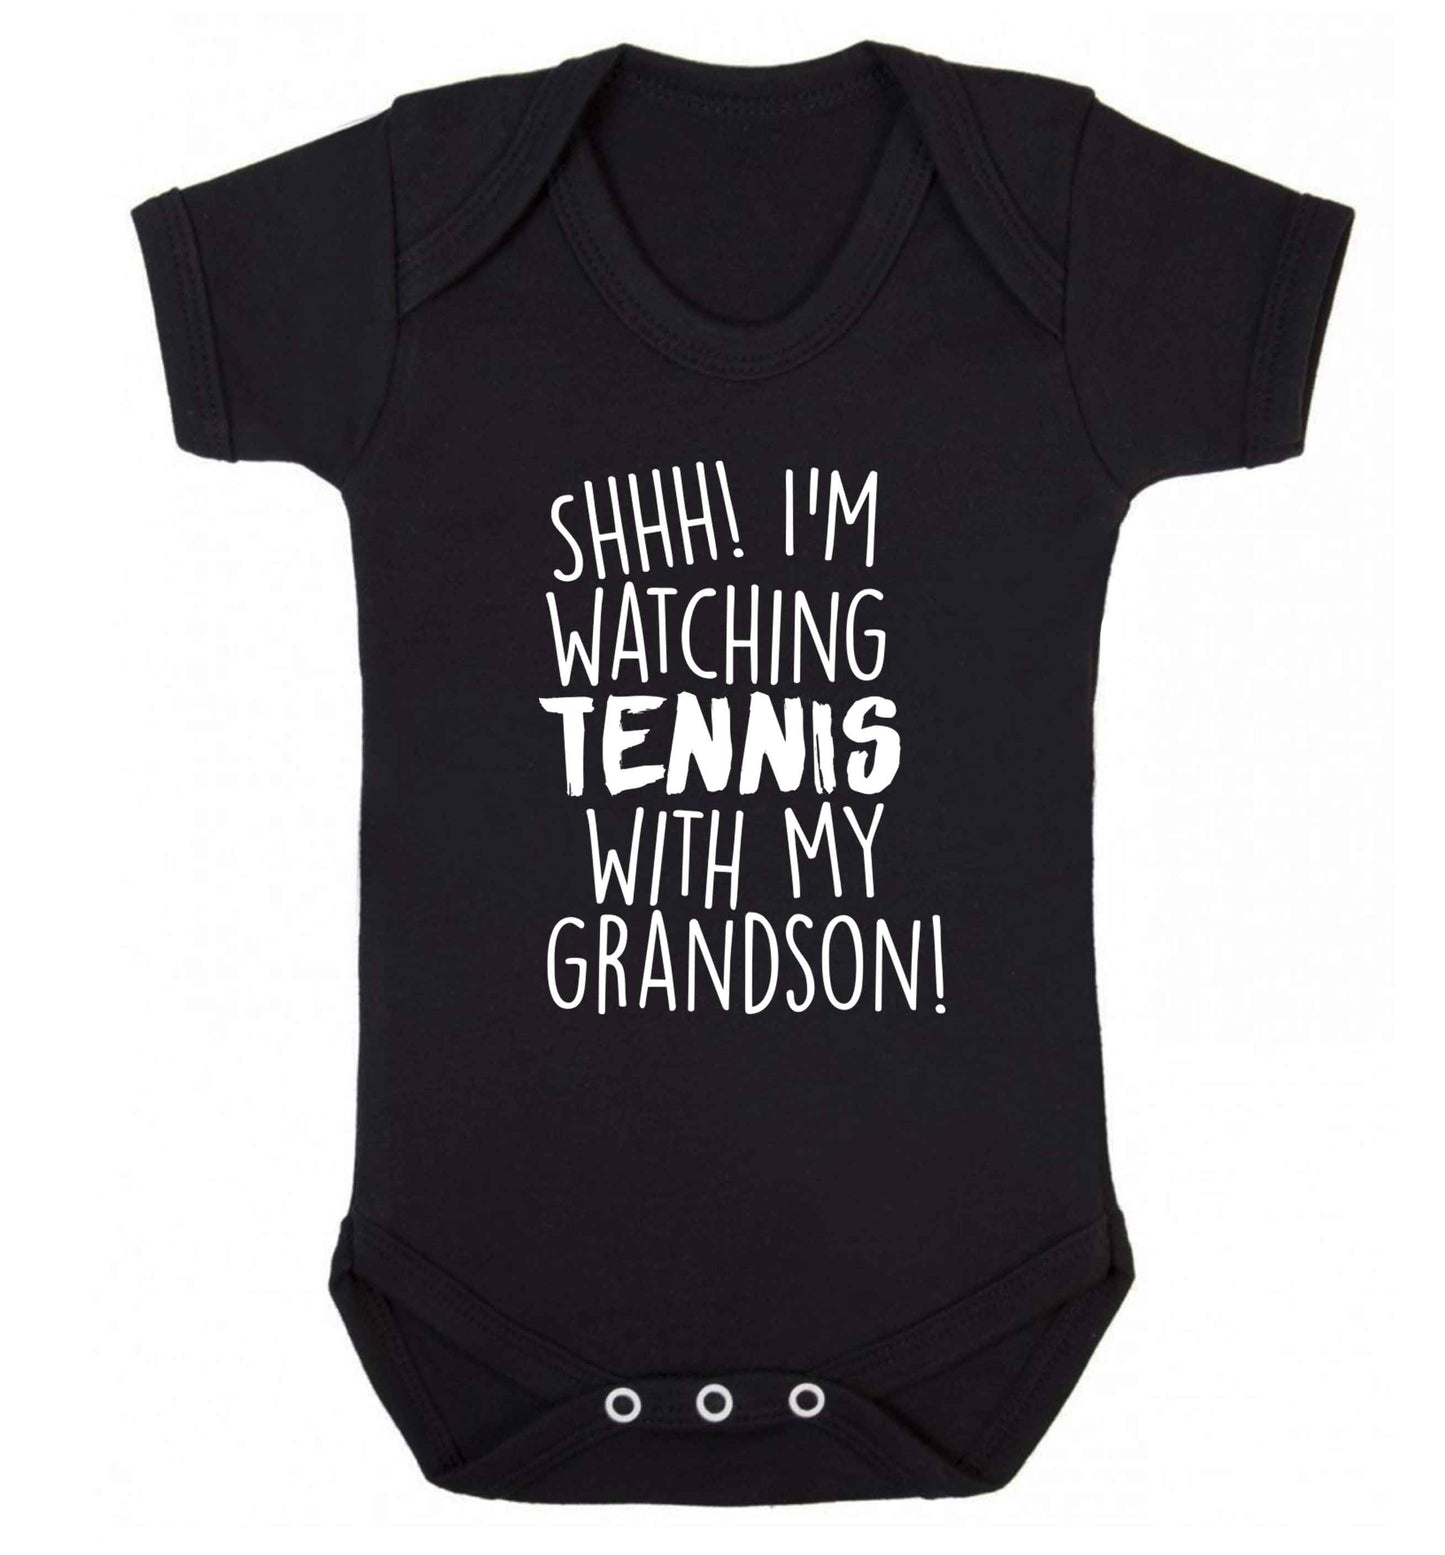 Shh! I'm watching tennis with my grandson! Baby Vest black 18-24 months